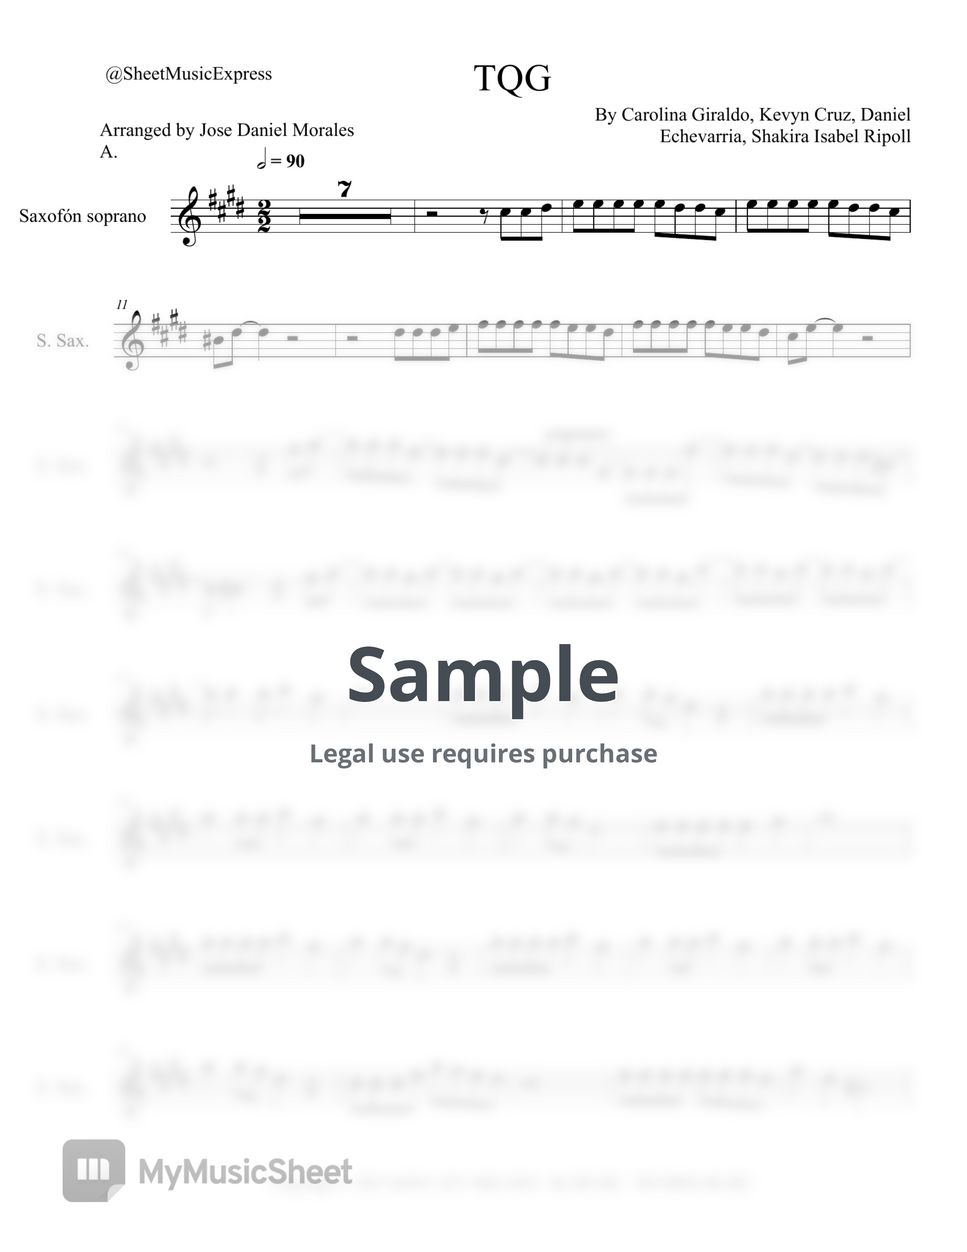 Karol G - TQG soprano sax (Latin) by Sheet Music Express